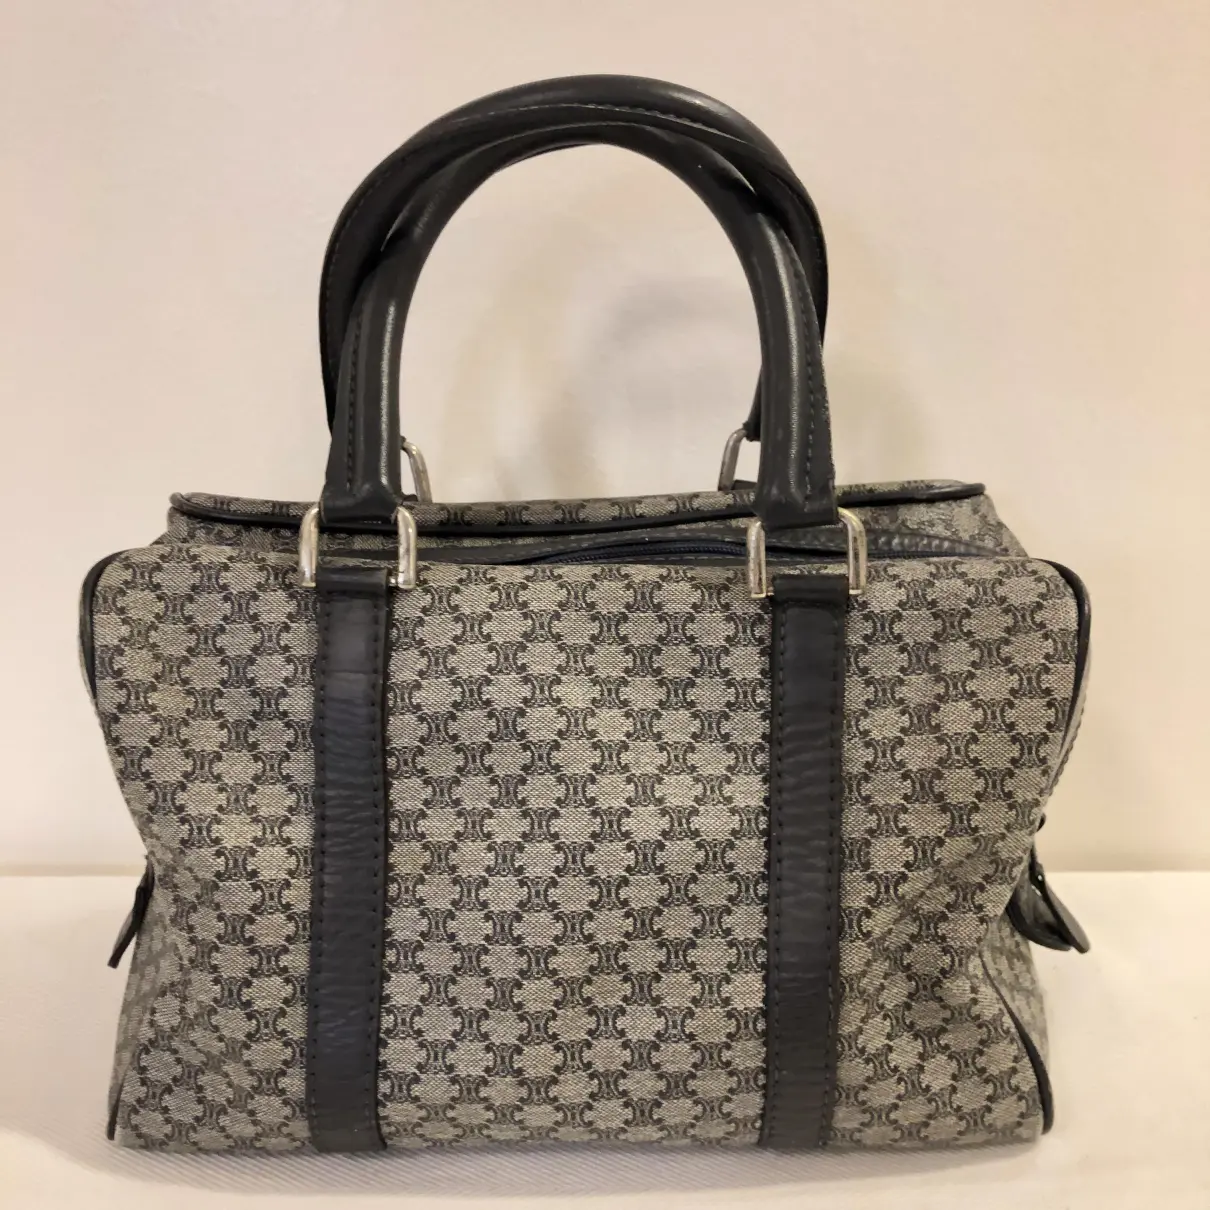 Buy Celine Triomphe Vintage cloth handbag online - Vintage